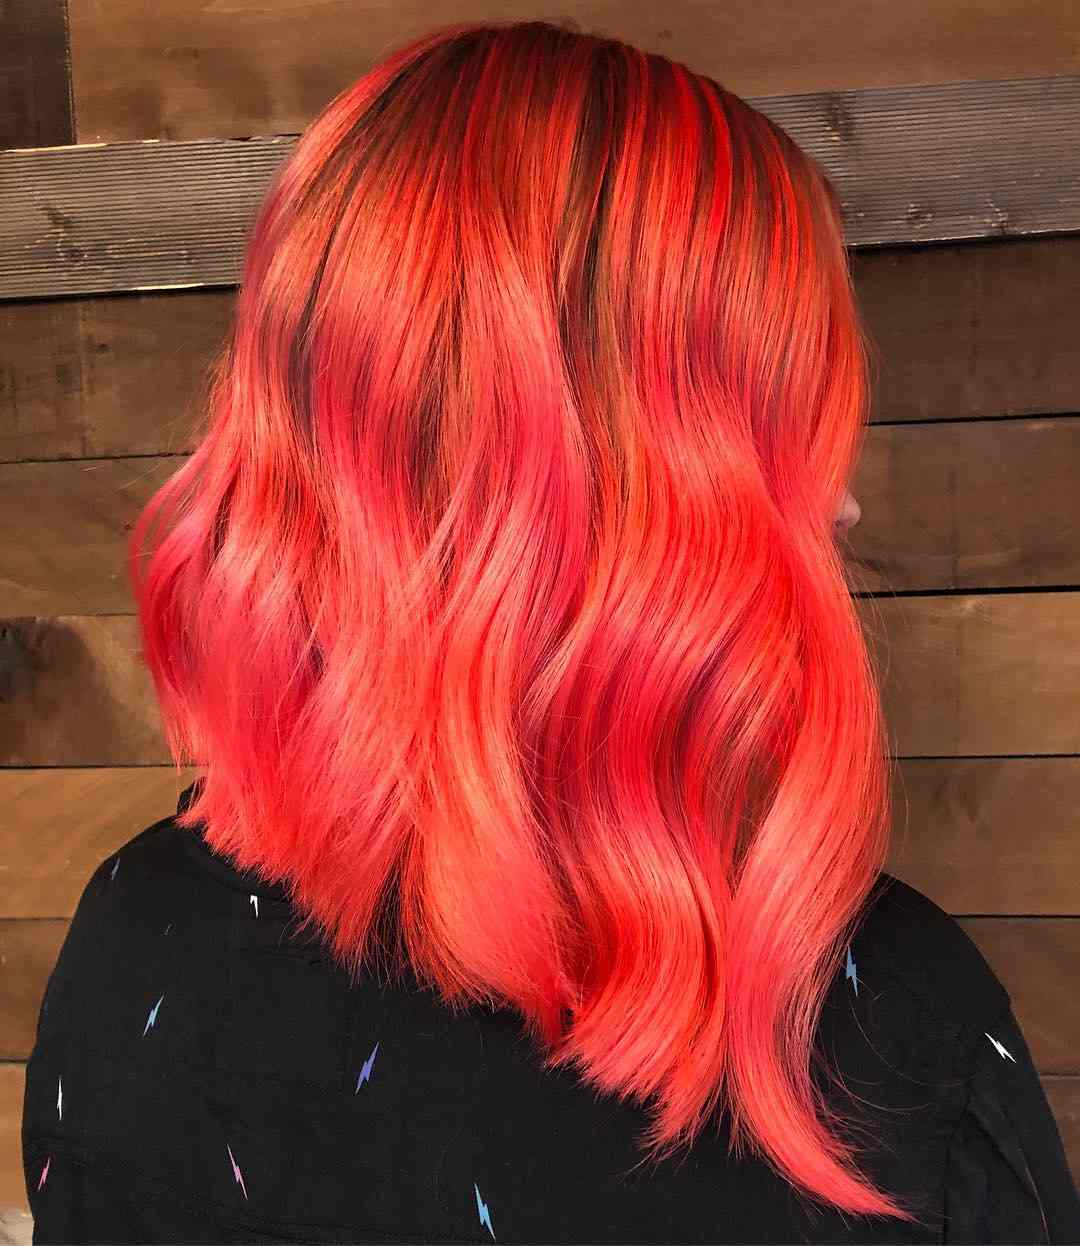 Light red hair color care in summer hair trends medium long hair styles Locken